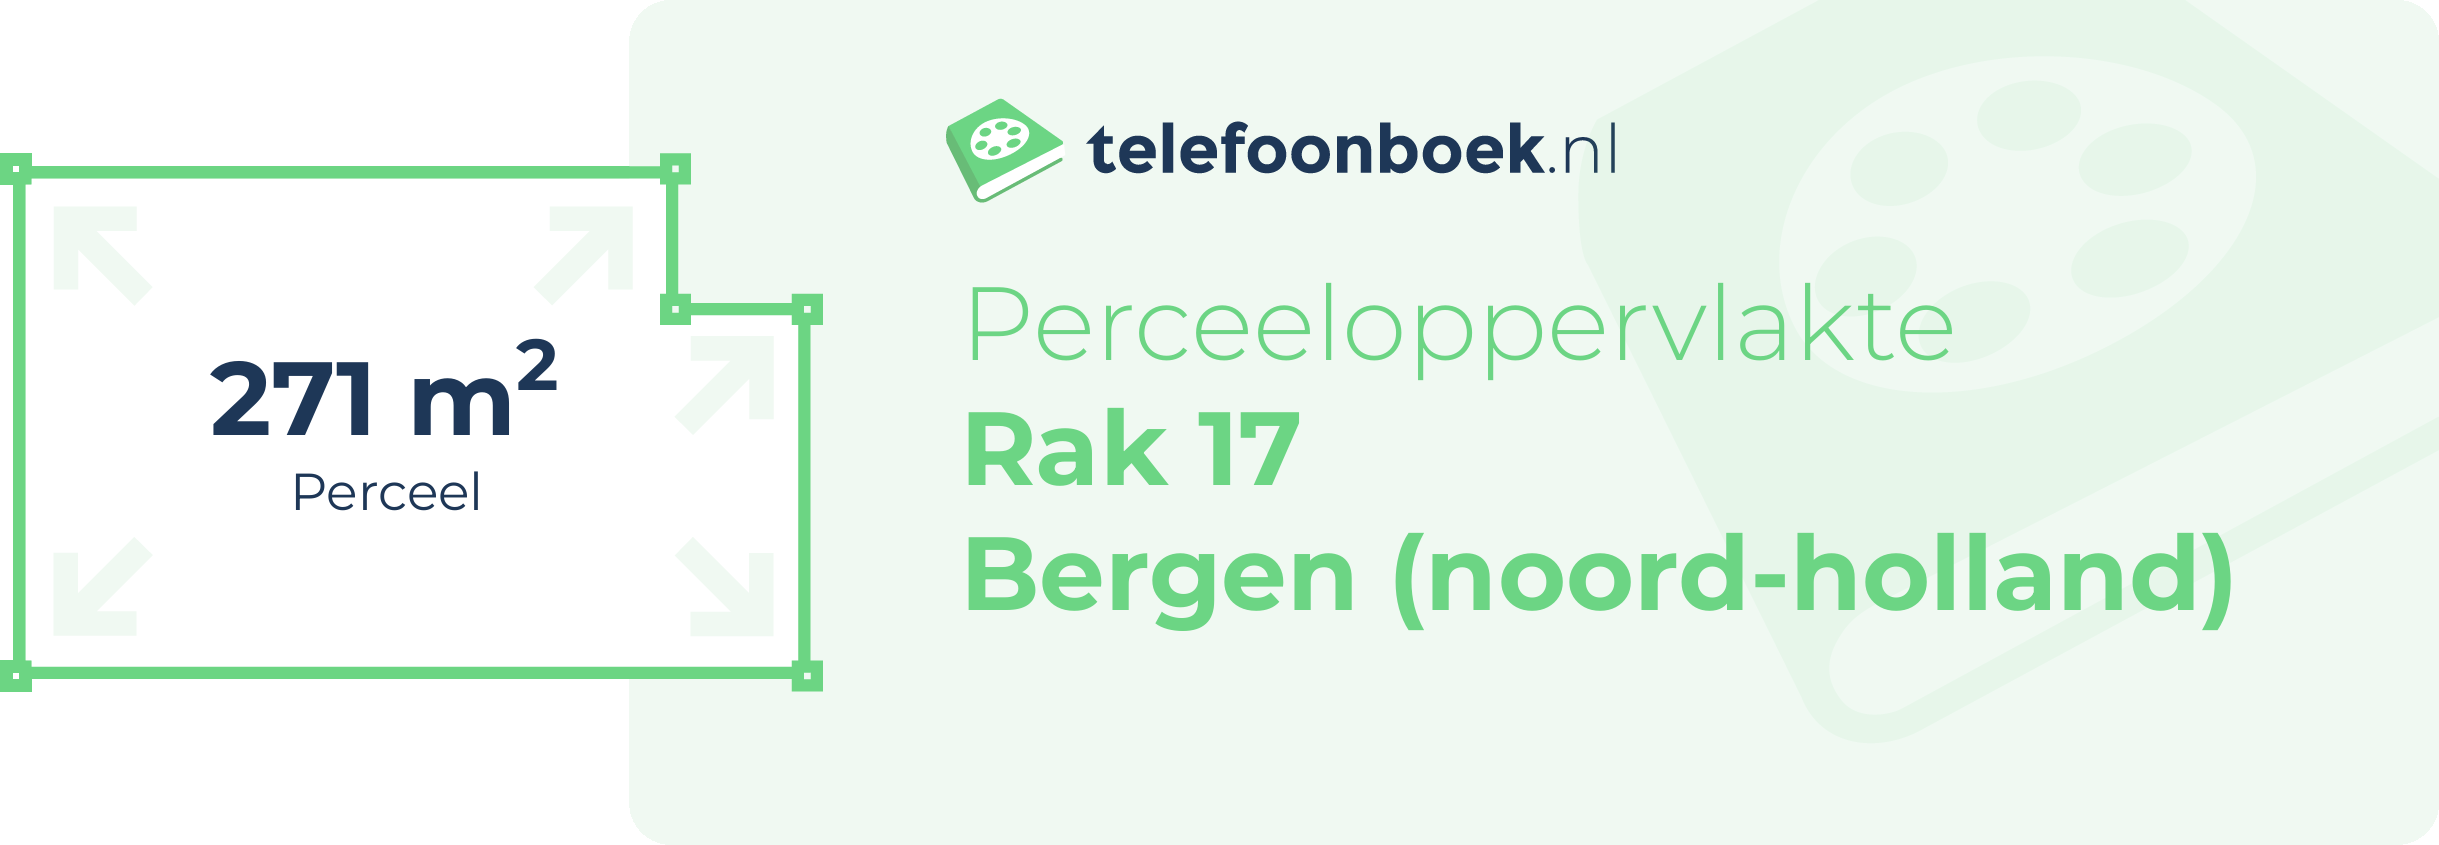 Perceeloppervlakte Rak 17 Bergen (Noord-Holland)